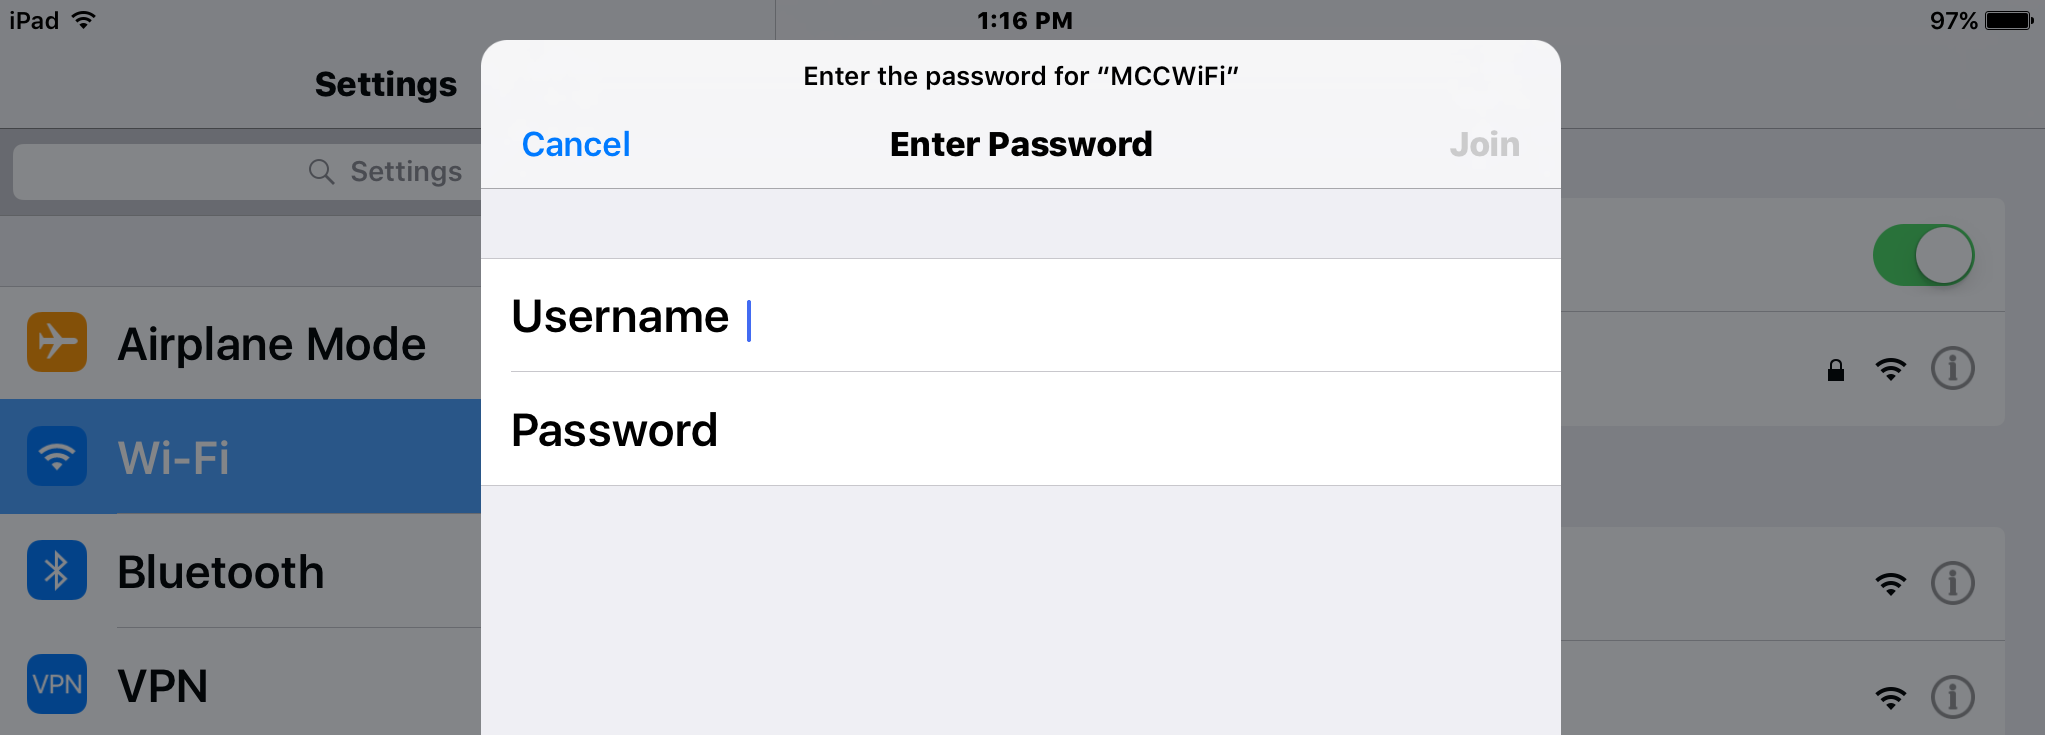 MCC WiFi secure login screen.